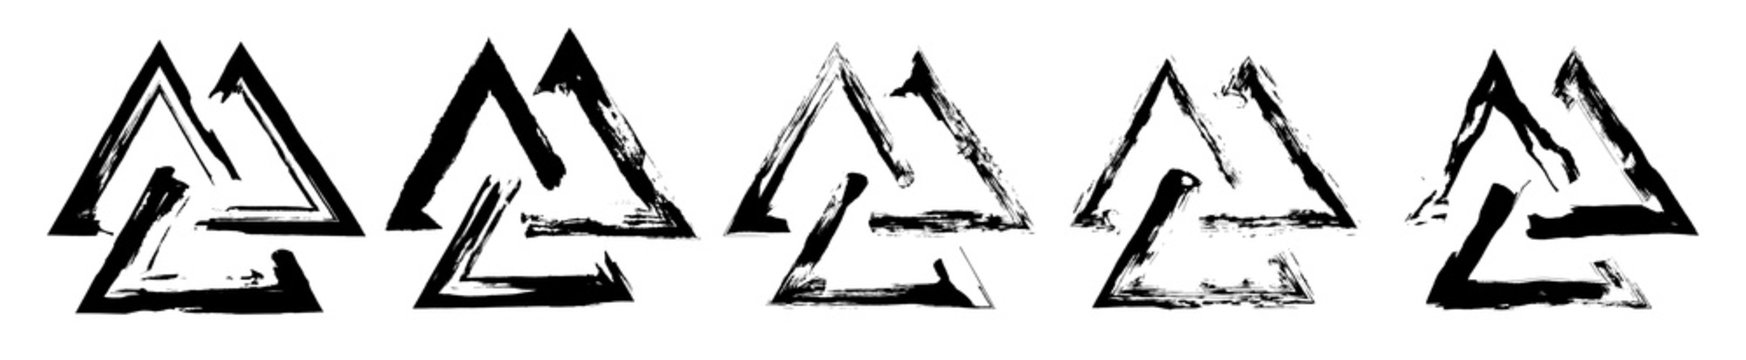 The valknut is a symbol consisting of three interlocked triangles. Set of Viking Age symbols. Black ink handwriting. Vector illustration symbols in grunge style